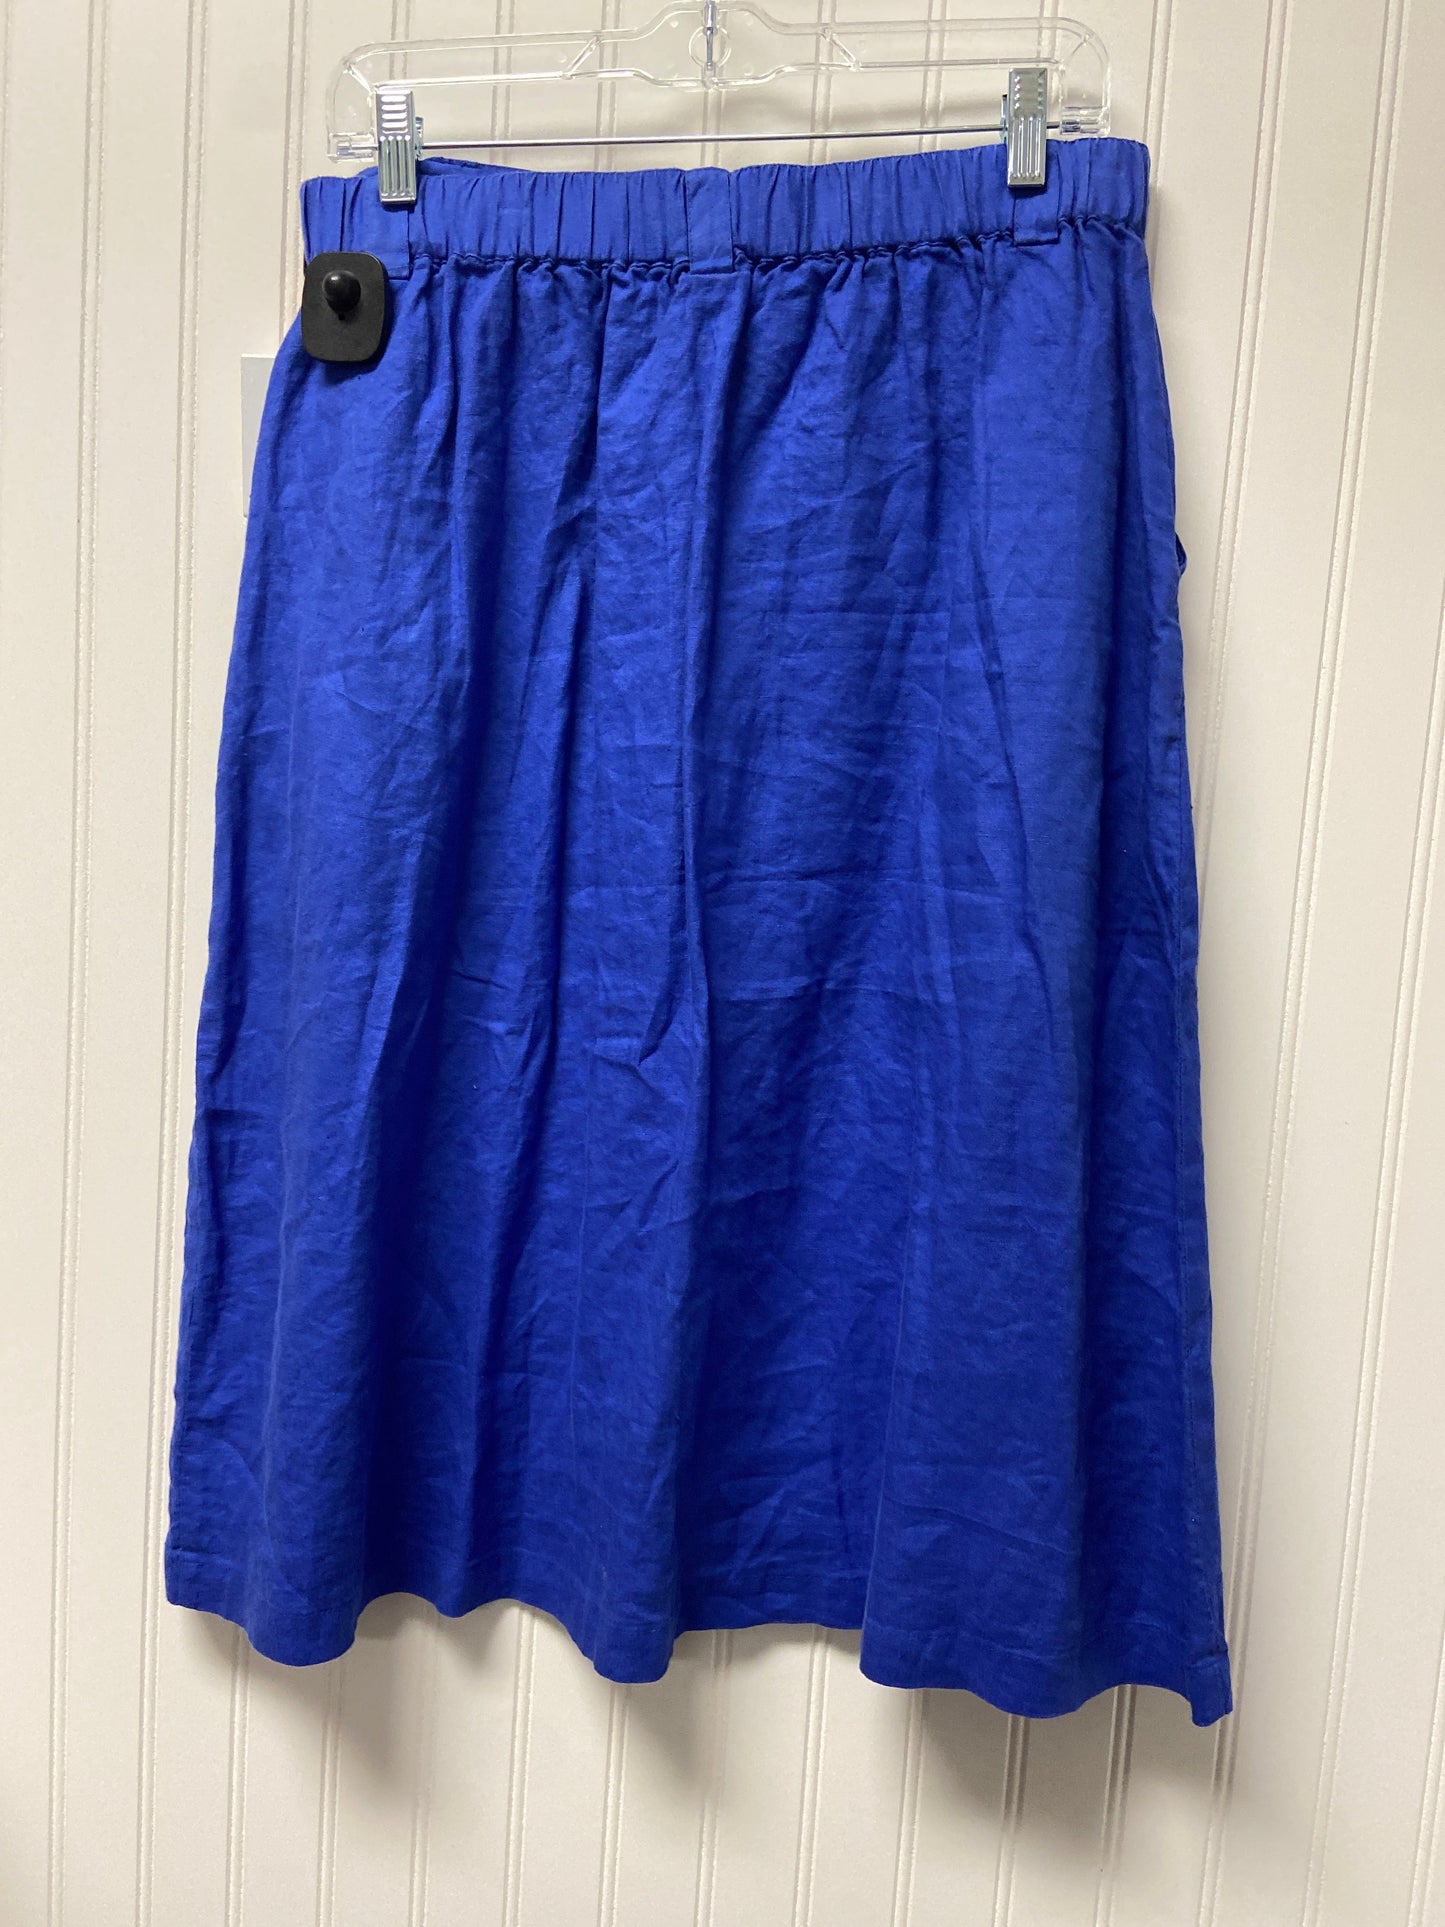 Skirt Midi By Christian Audigier  Size: L